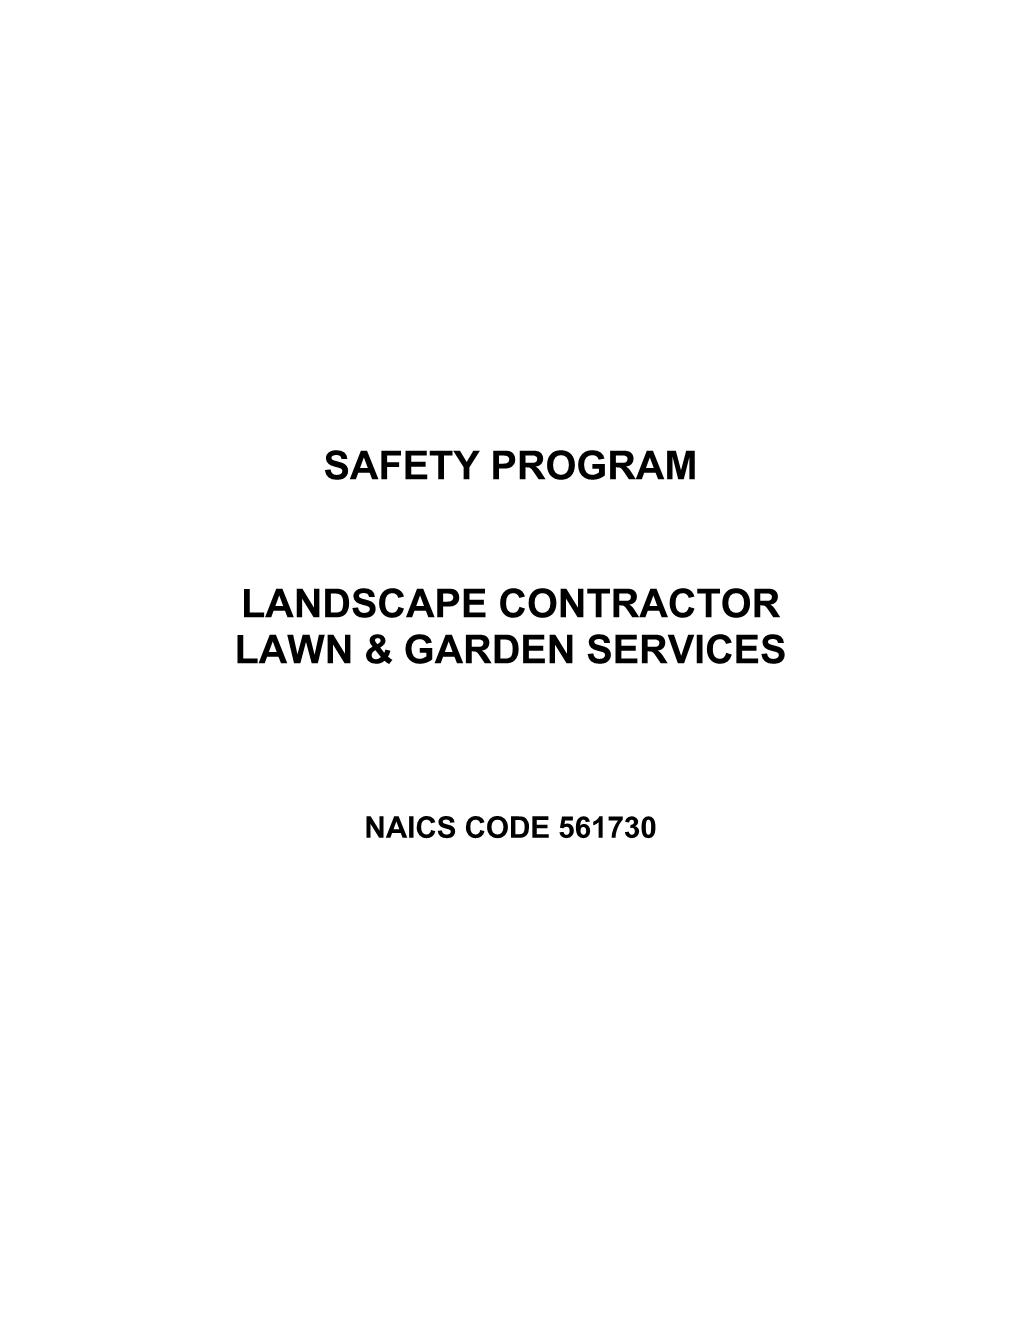 561730 LANDSCAPE CONTRACTOR LAWN & GARDEN SERVICES Safety Program